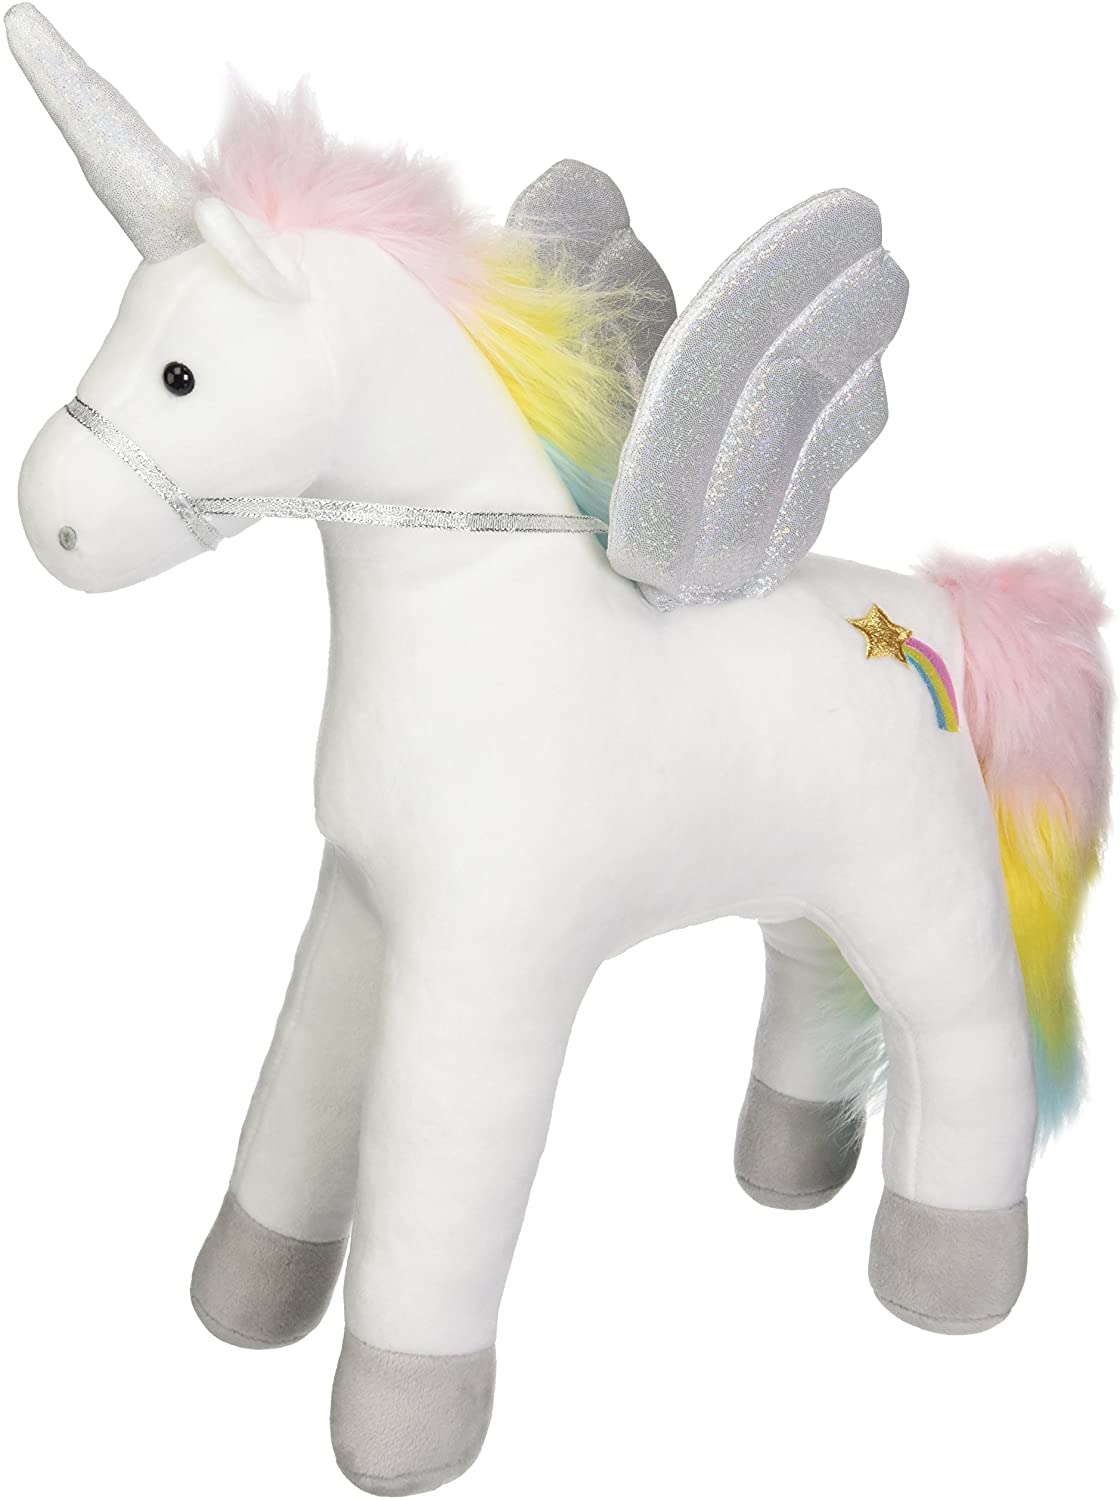 Gund My Magical Light & Sound Unicorn - ANB Baby -$20 - $50